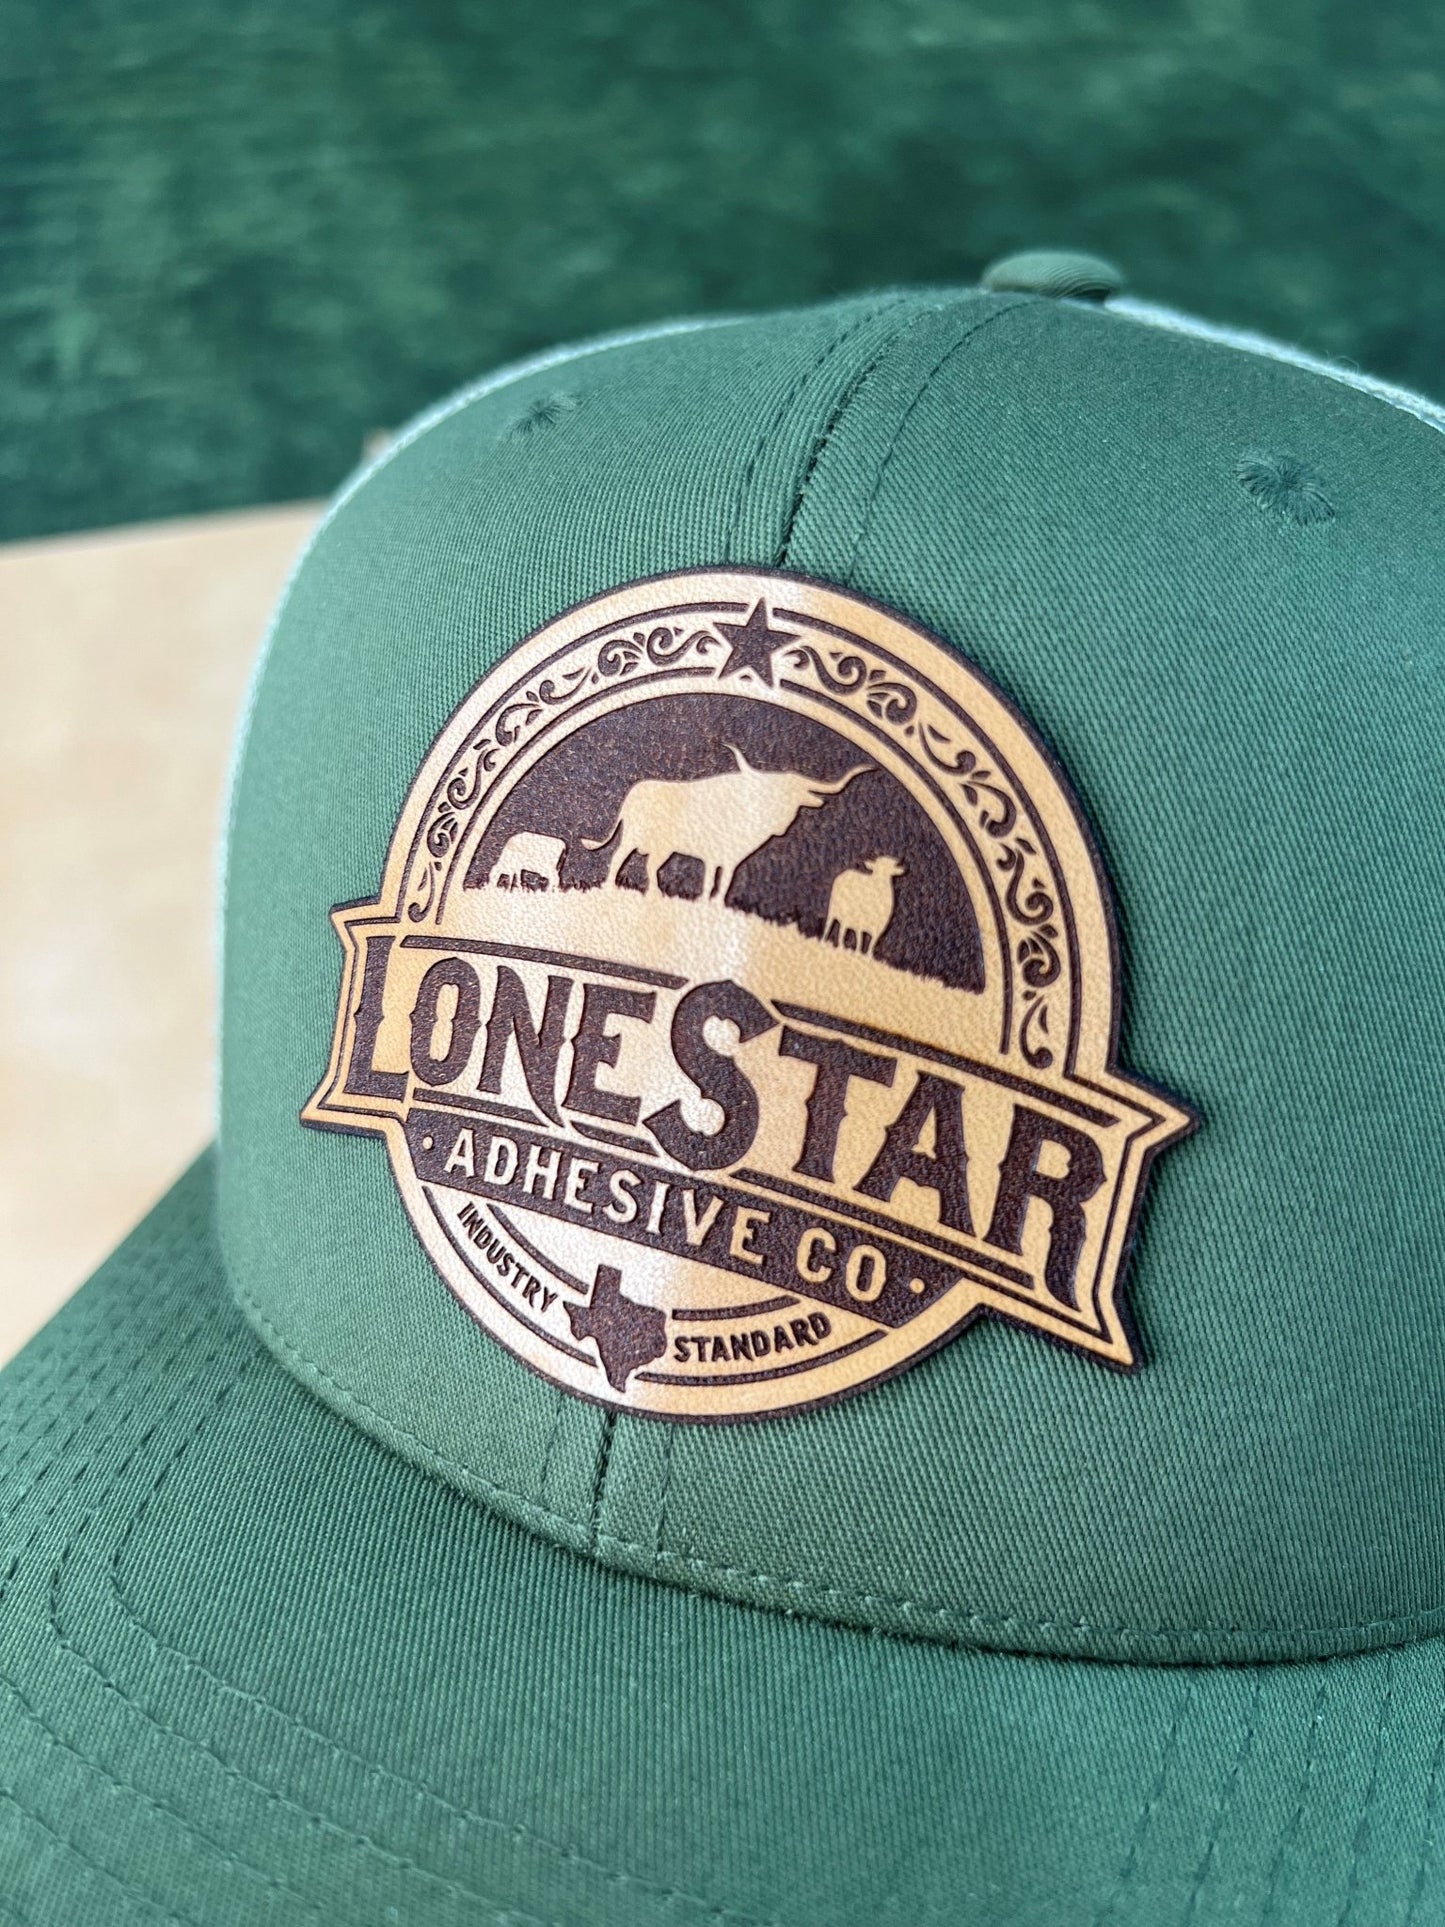 Jersey Tan Top-Grain Leather Panels (12x18) - #LoneStar Adhesive#